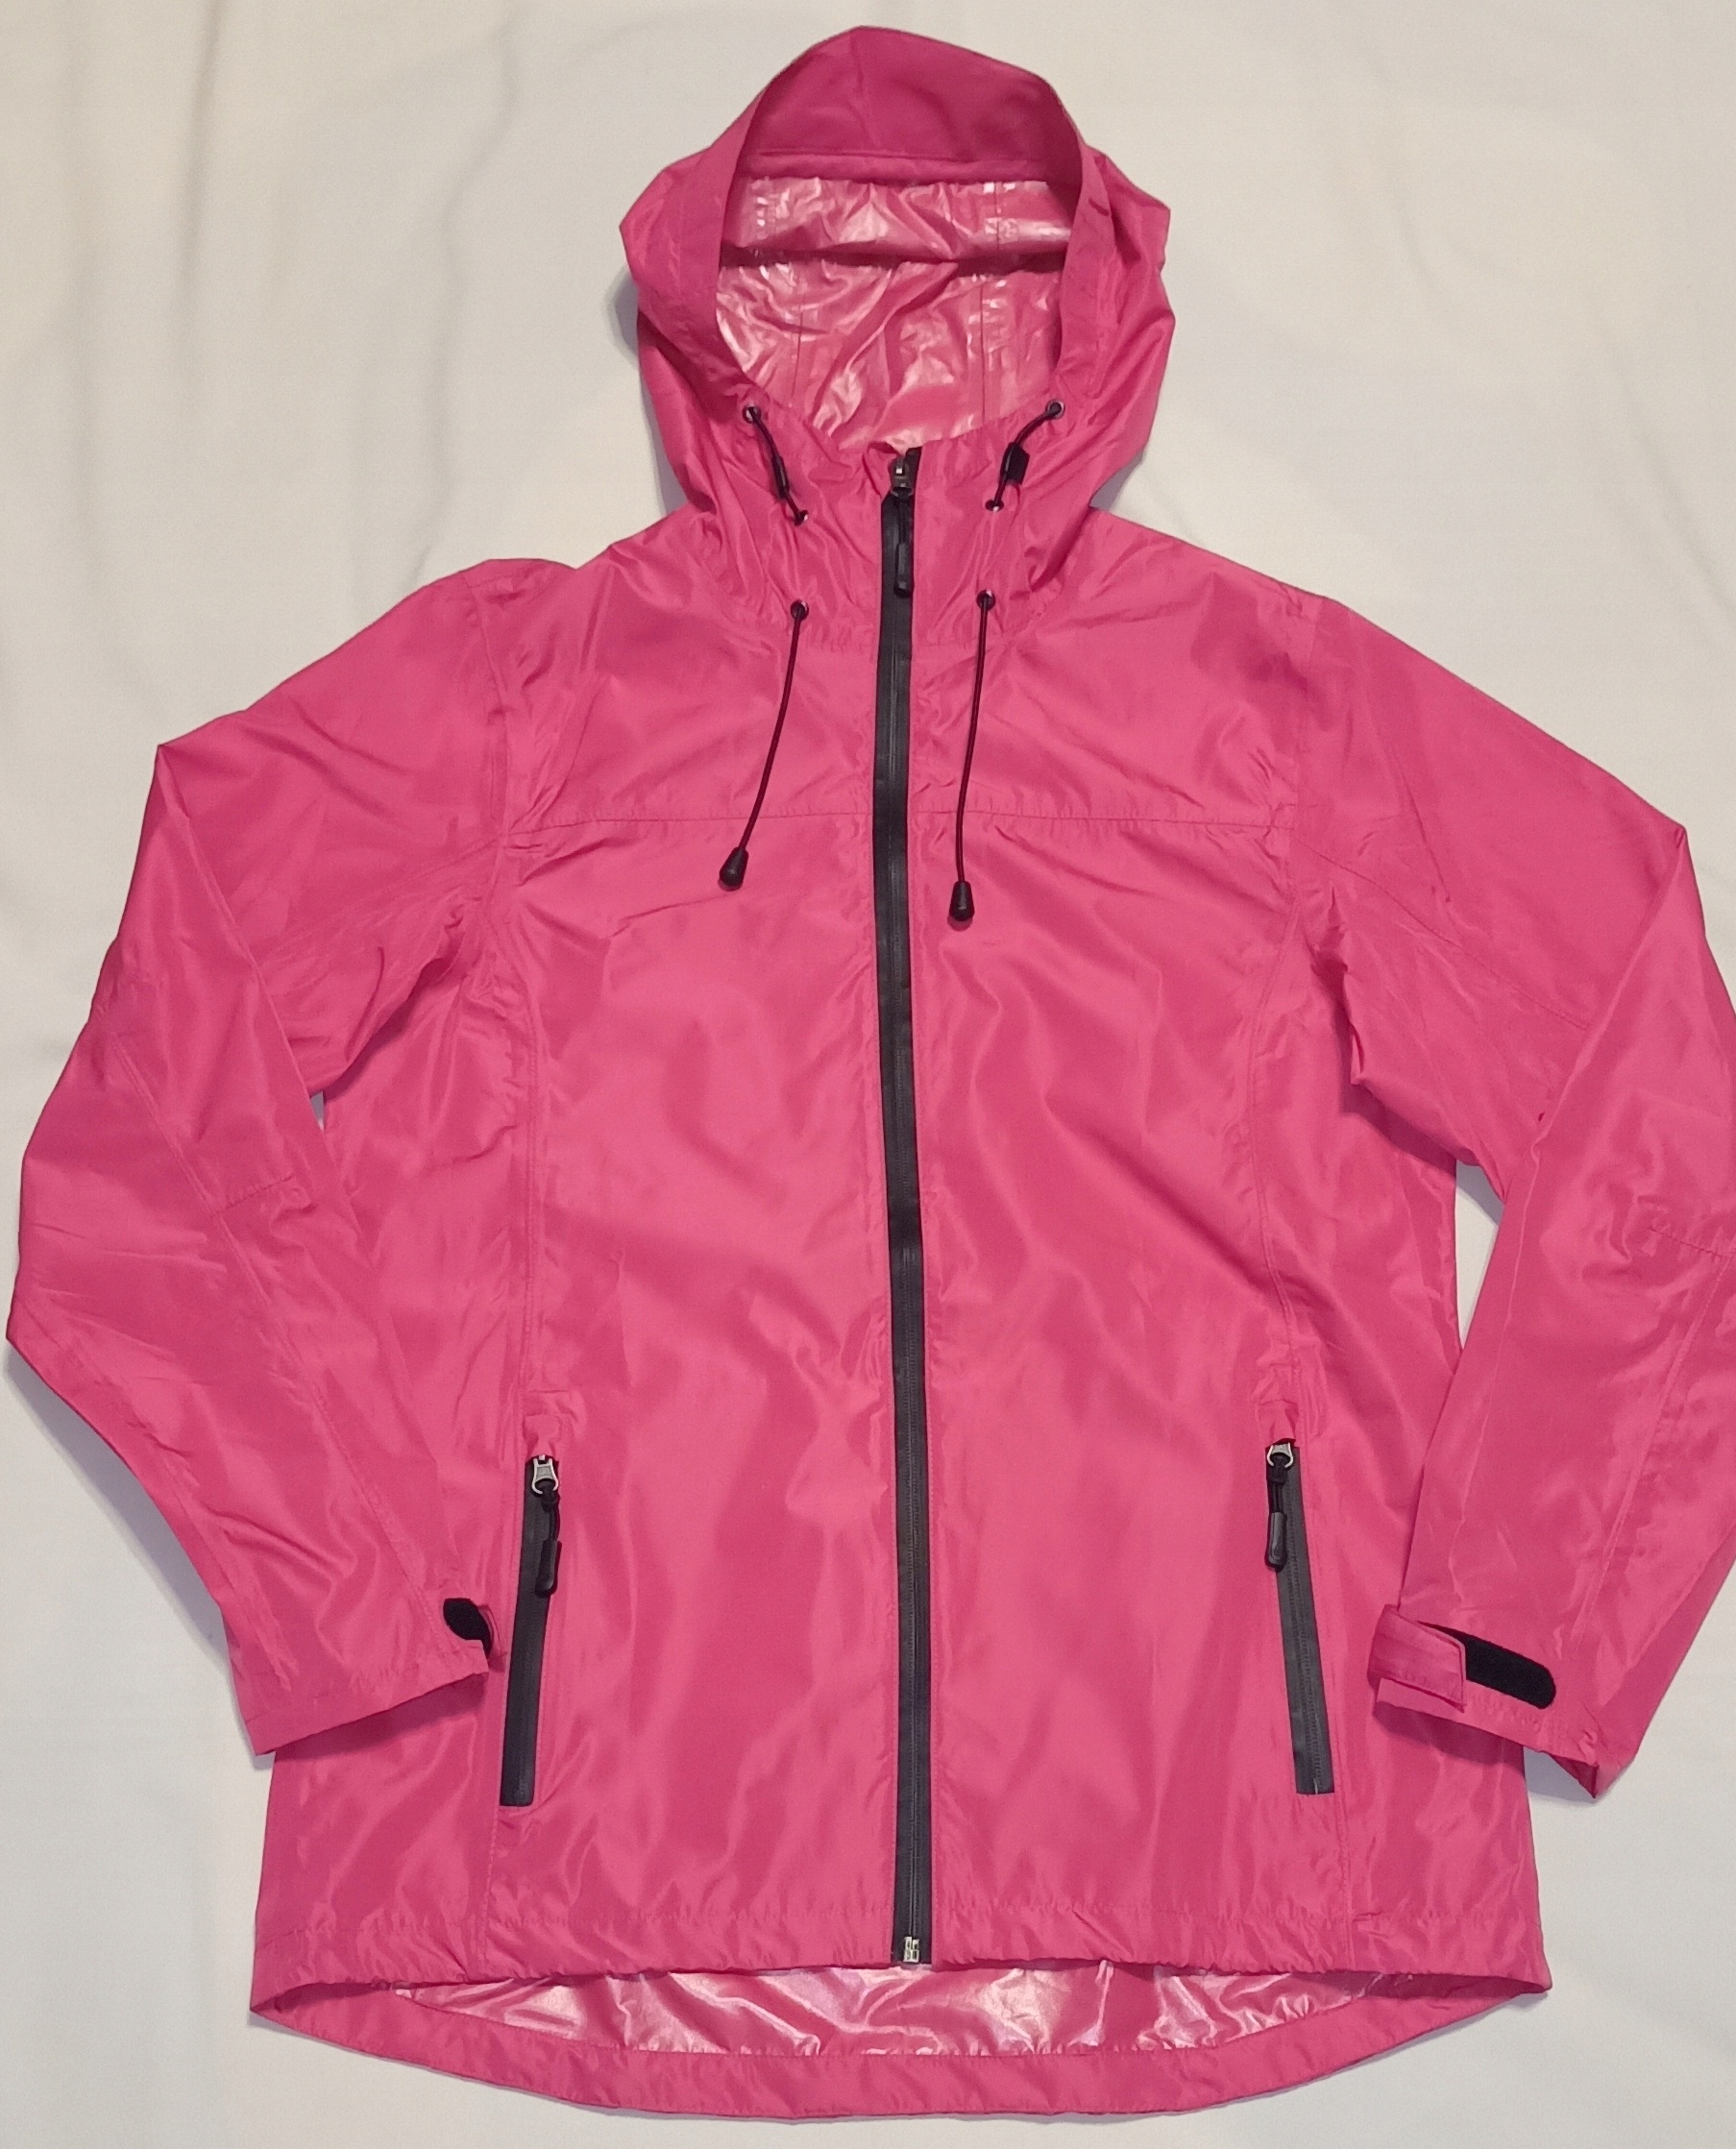 Pink Crivit rain jacket